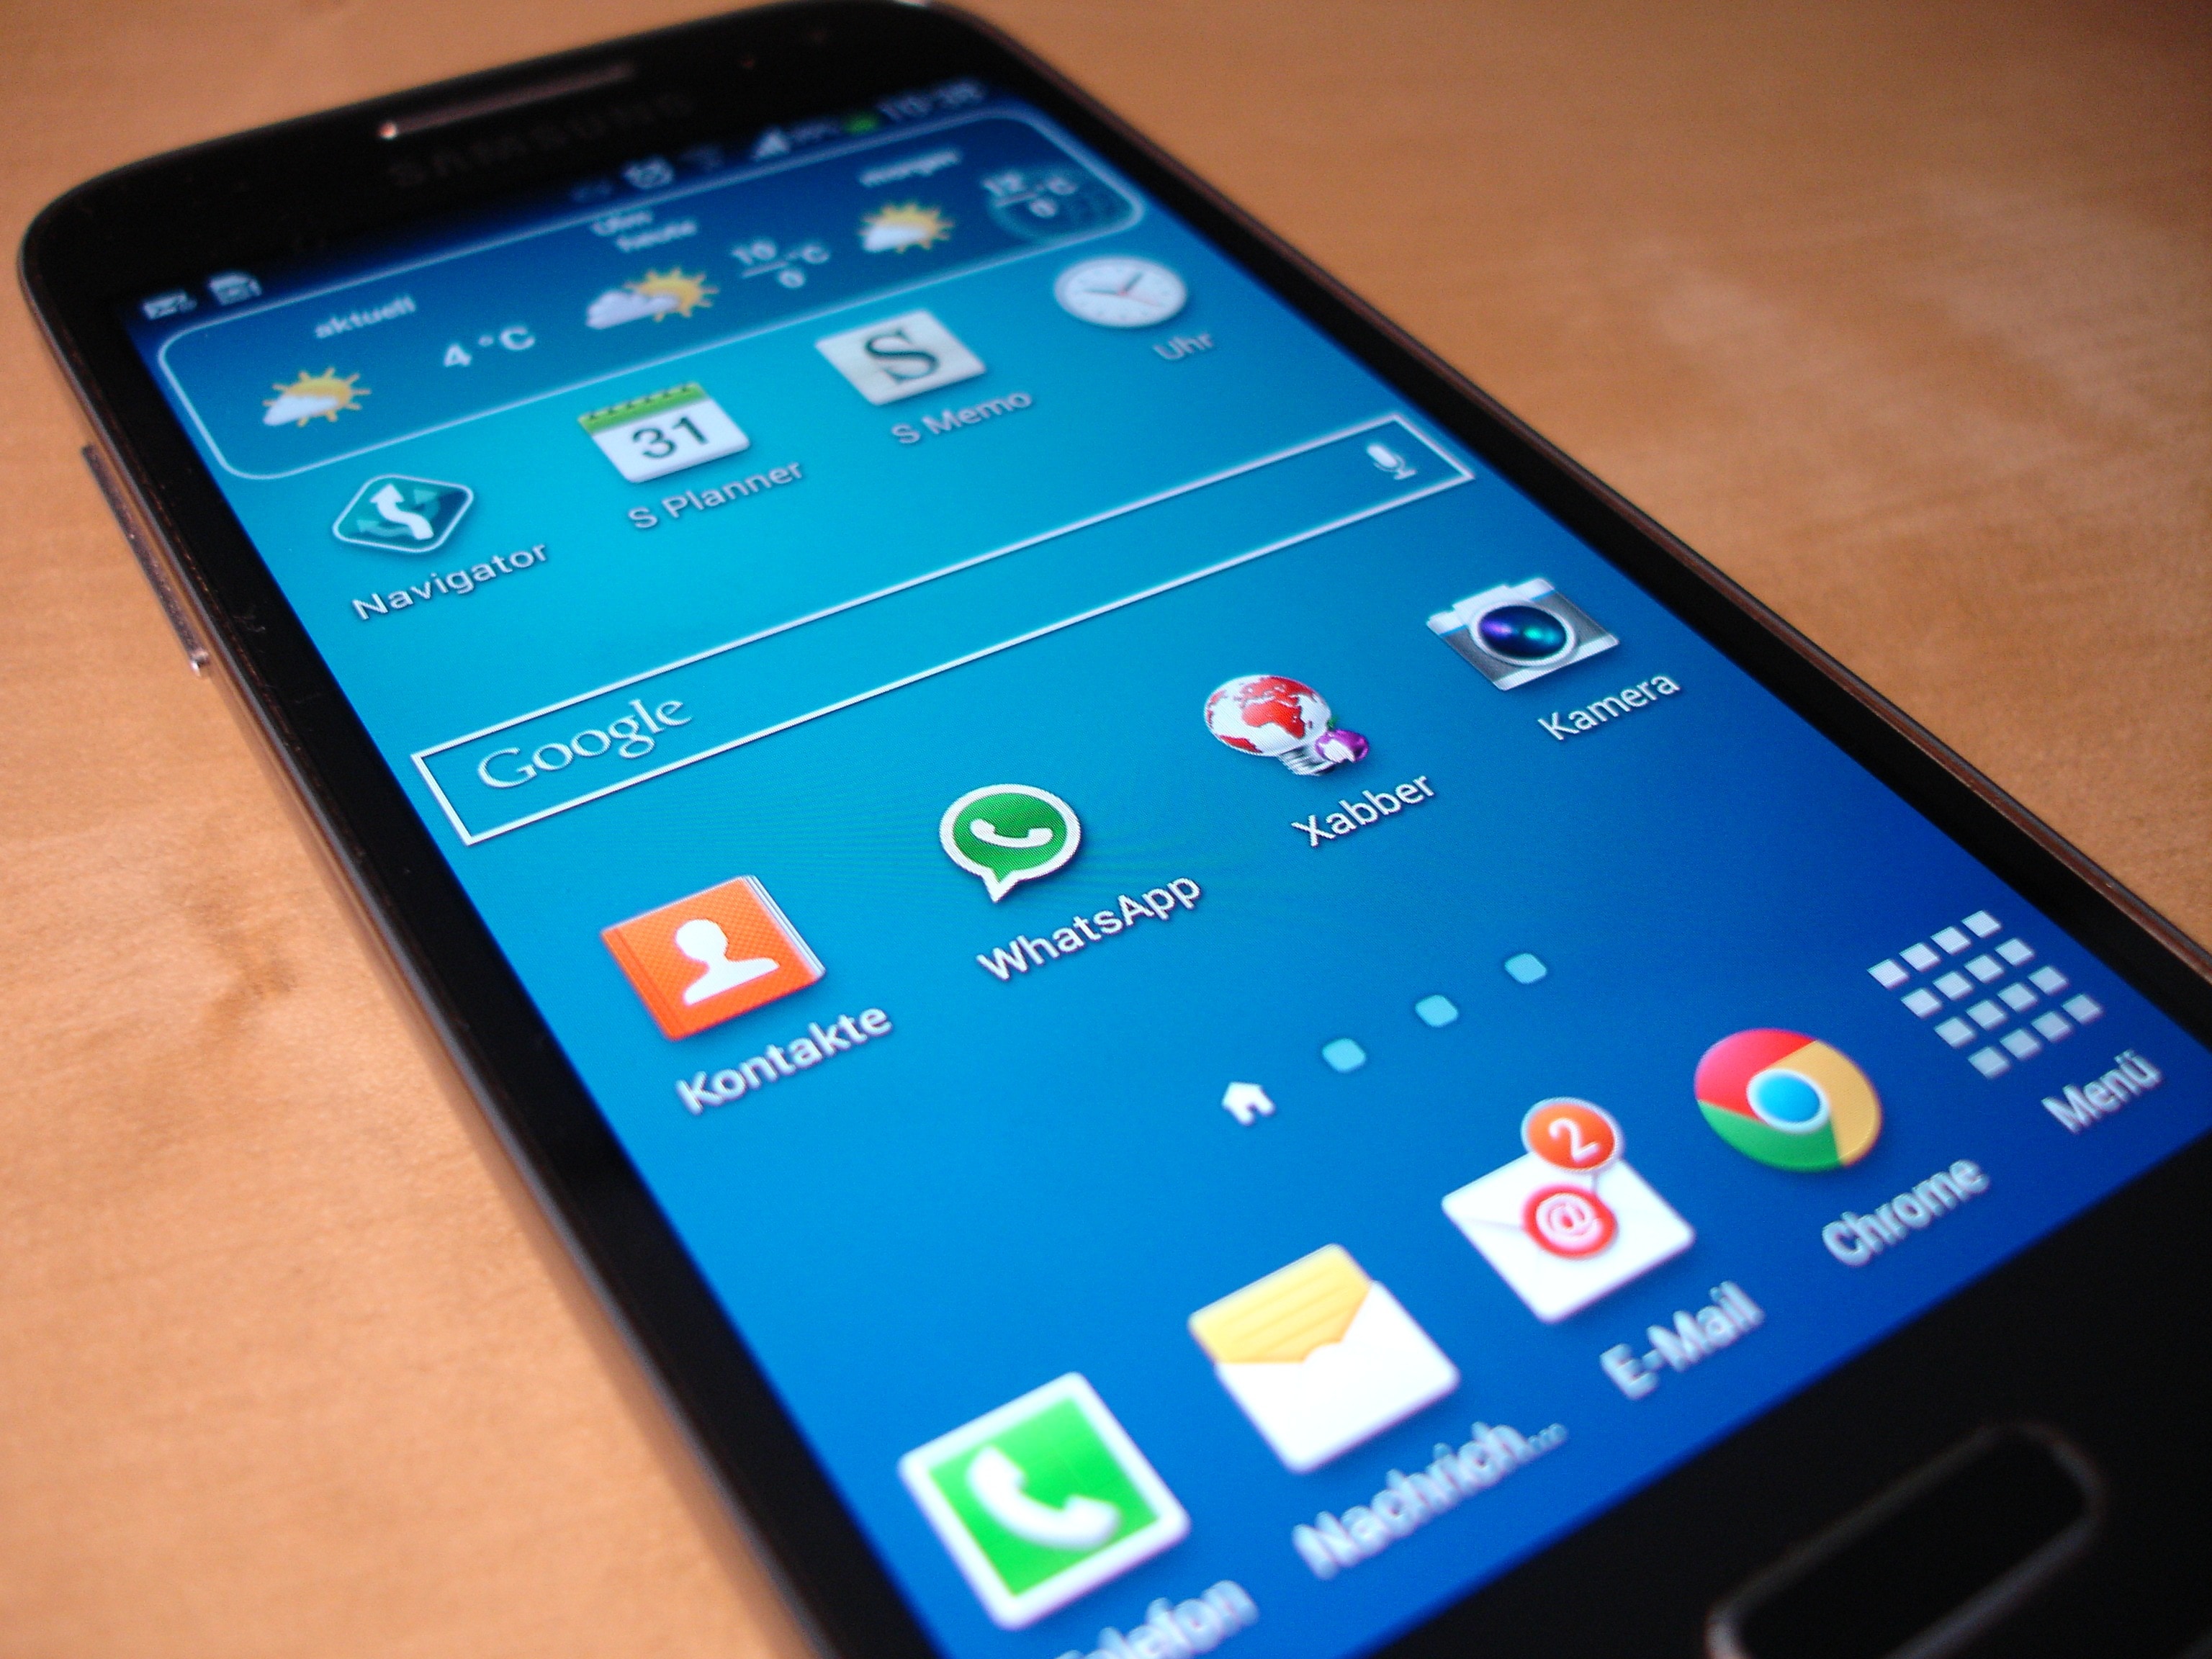 Smartphone, Galaxy S4 Mini, Samsung, technology, communication